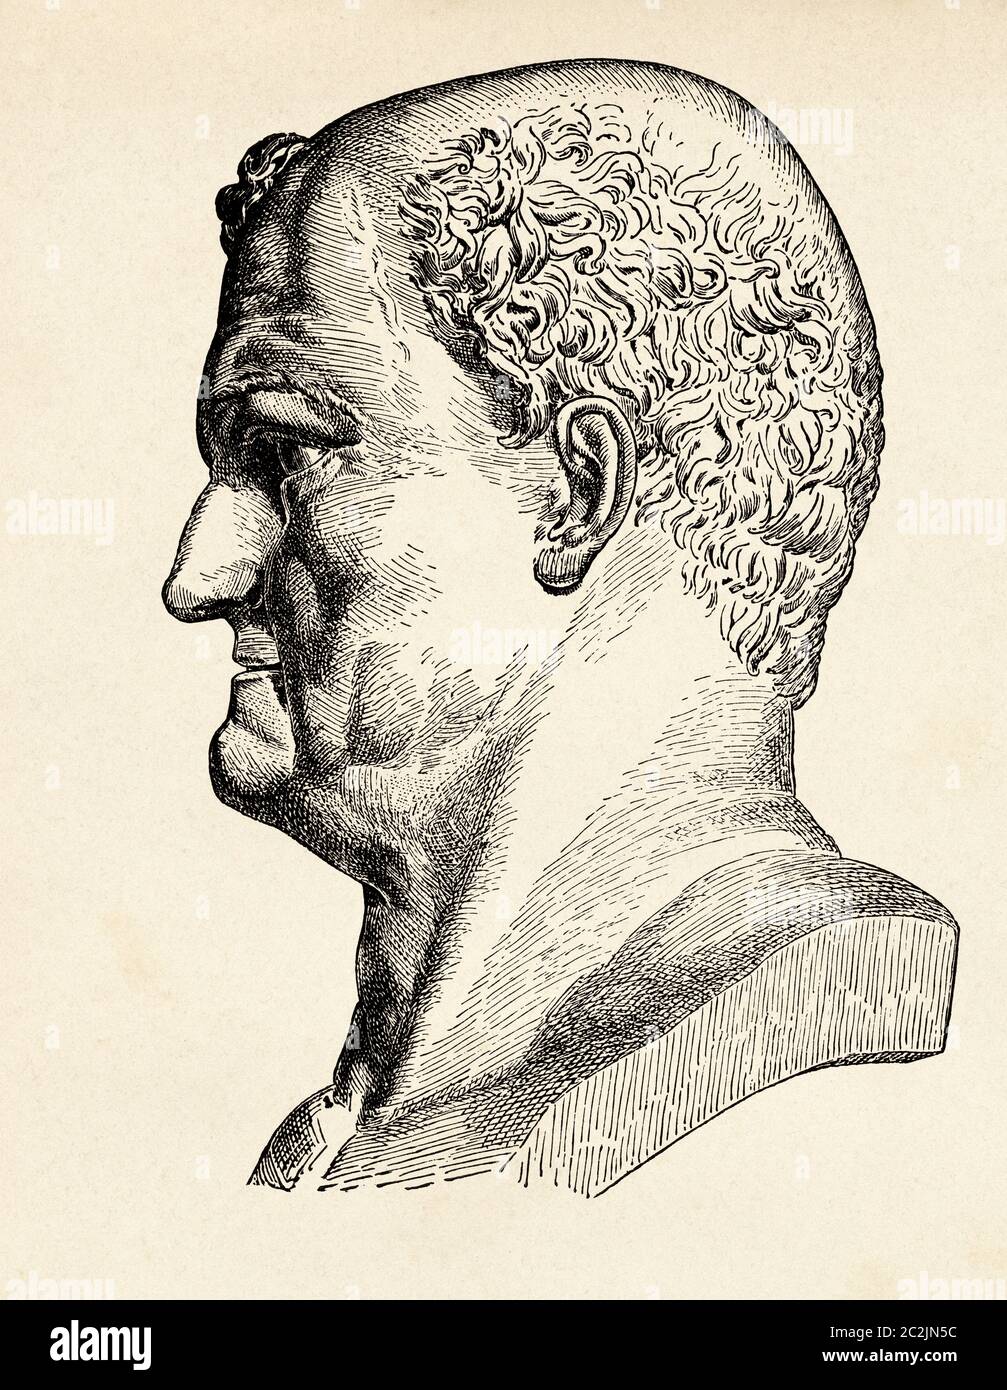 Portrait Roman Emperor Vespasian Titus Flavius Caesar Vespasianus Augustus, Italy, Ancient Rome. Old 19th century engraved illustration, El Mundo Ilustrado 1880 Stock Photo